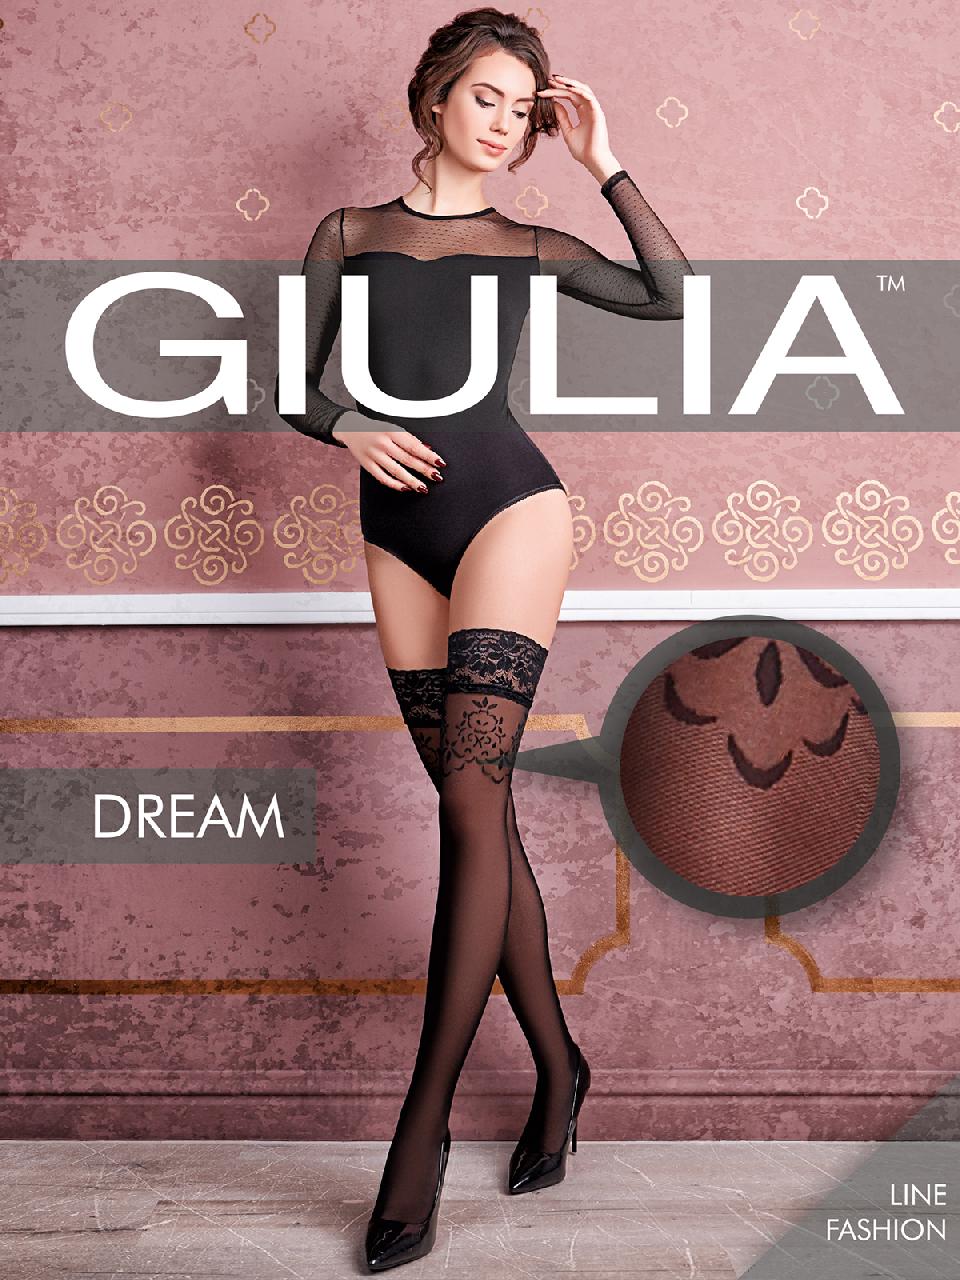 Giulia Dream 02 /чулки/ bianco 1/2